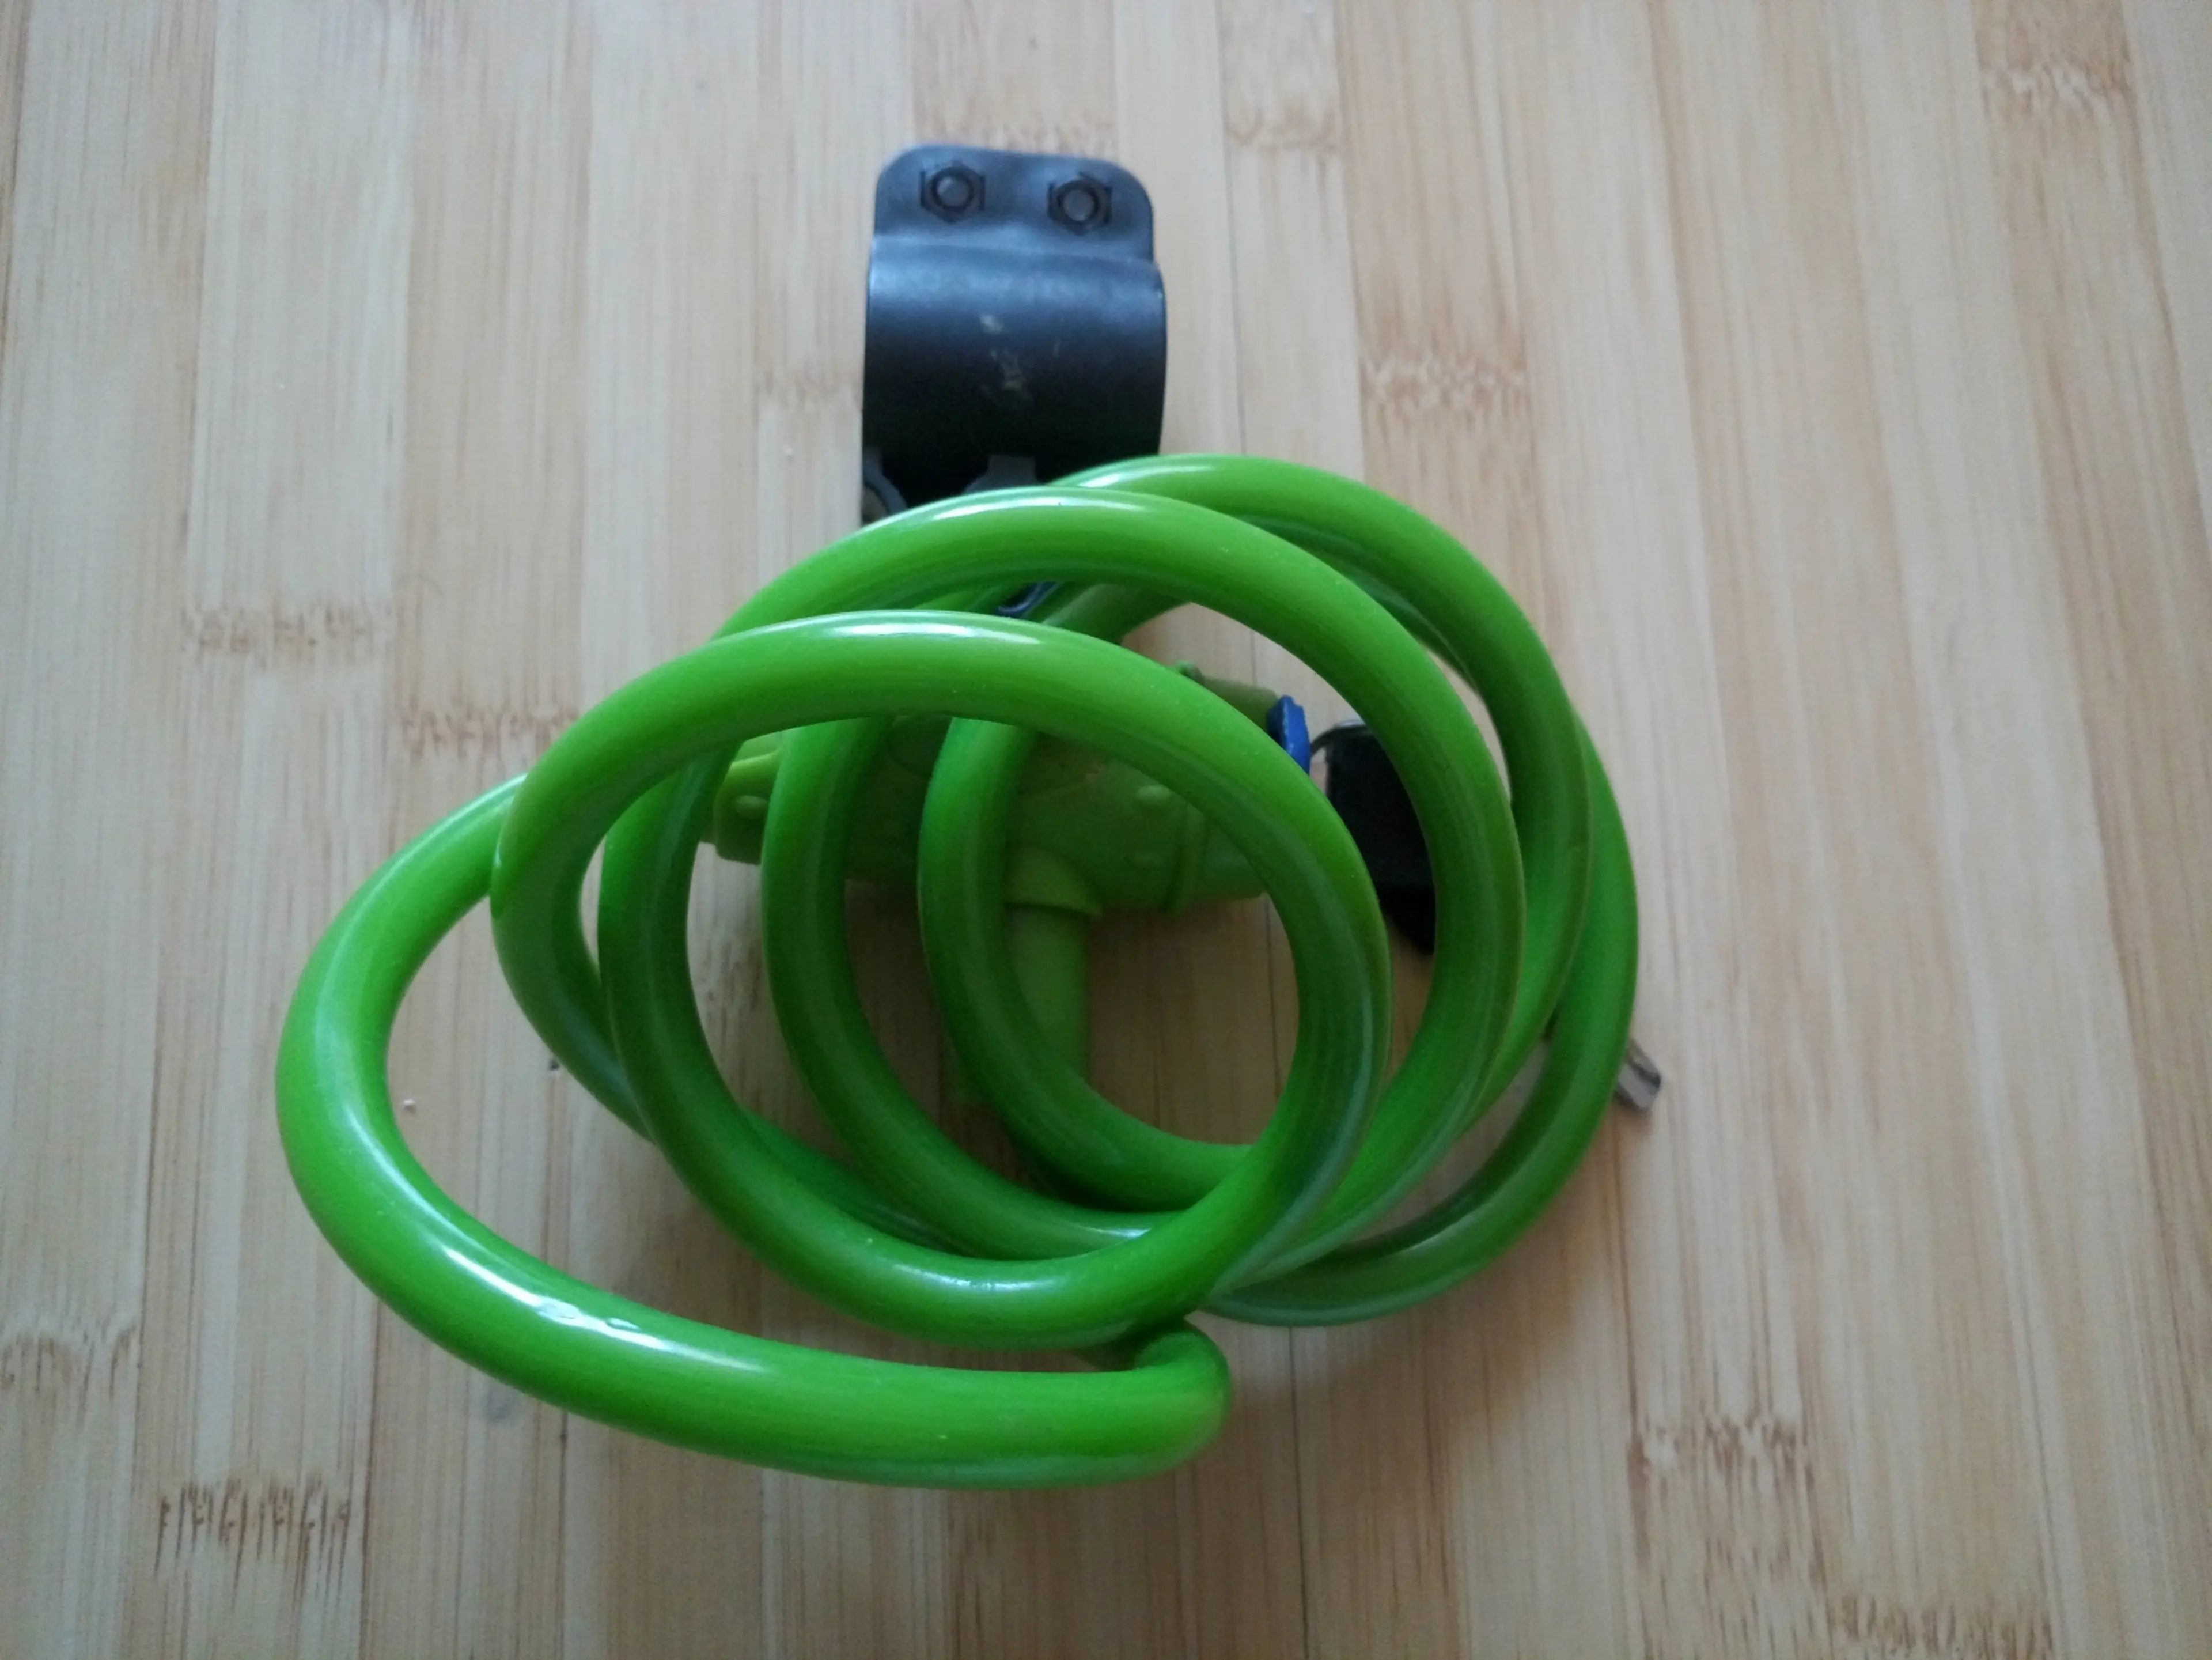 2. Antifurt tip spirala, verde, pt tija de sa